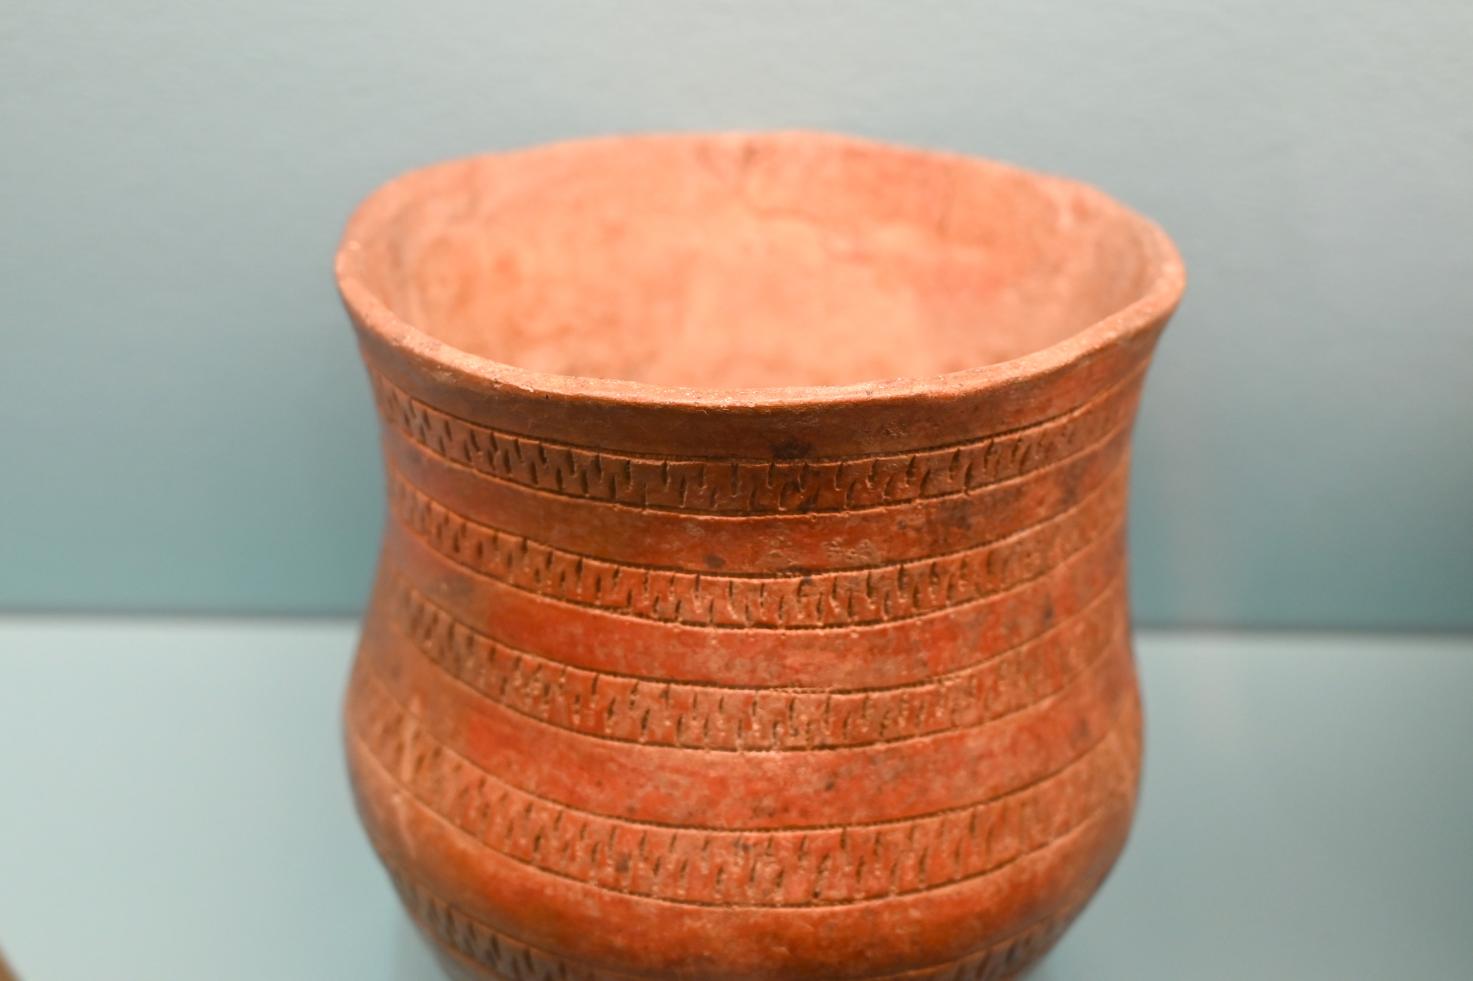 Glockenbecher, Endneolithikum, 2800 - 1700 v. Chr., 2800 - 2150 v. Chr., Bild 2/3